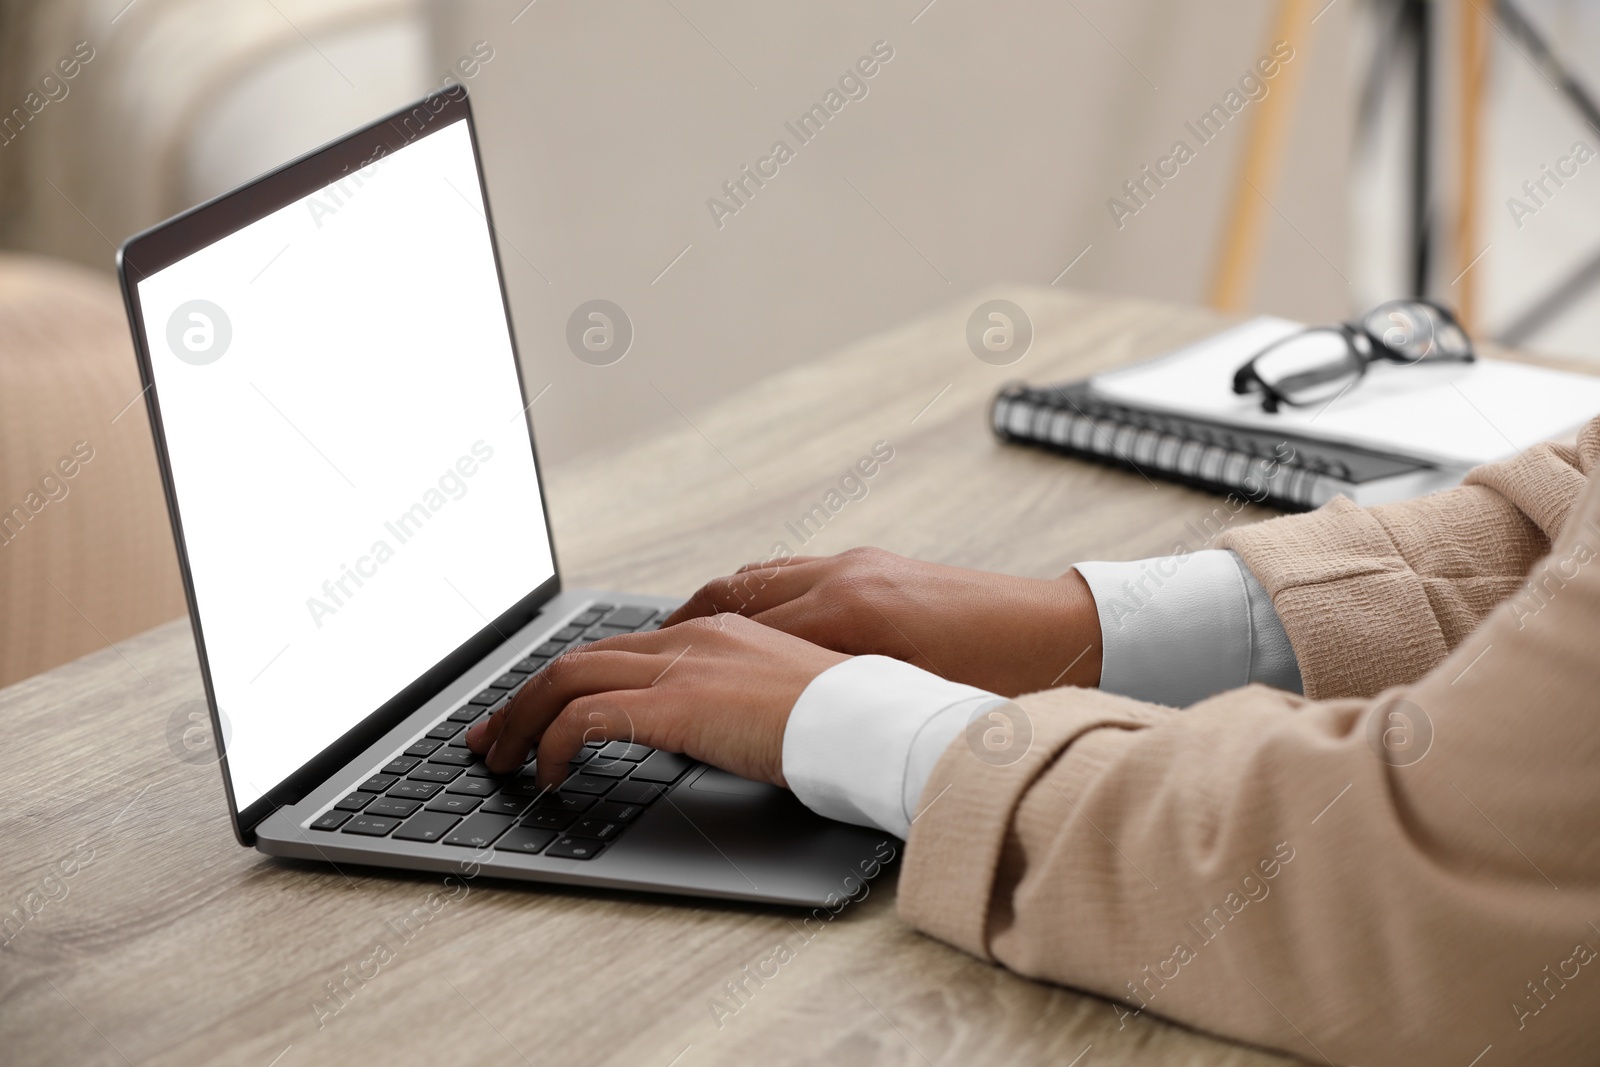 Photo of Woman using laptop at wooden desk indoors, closeup